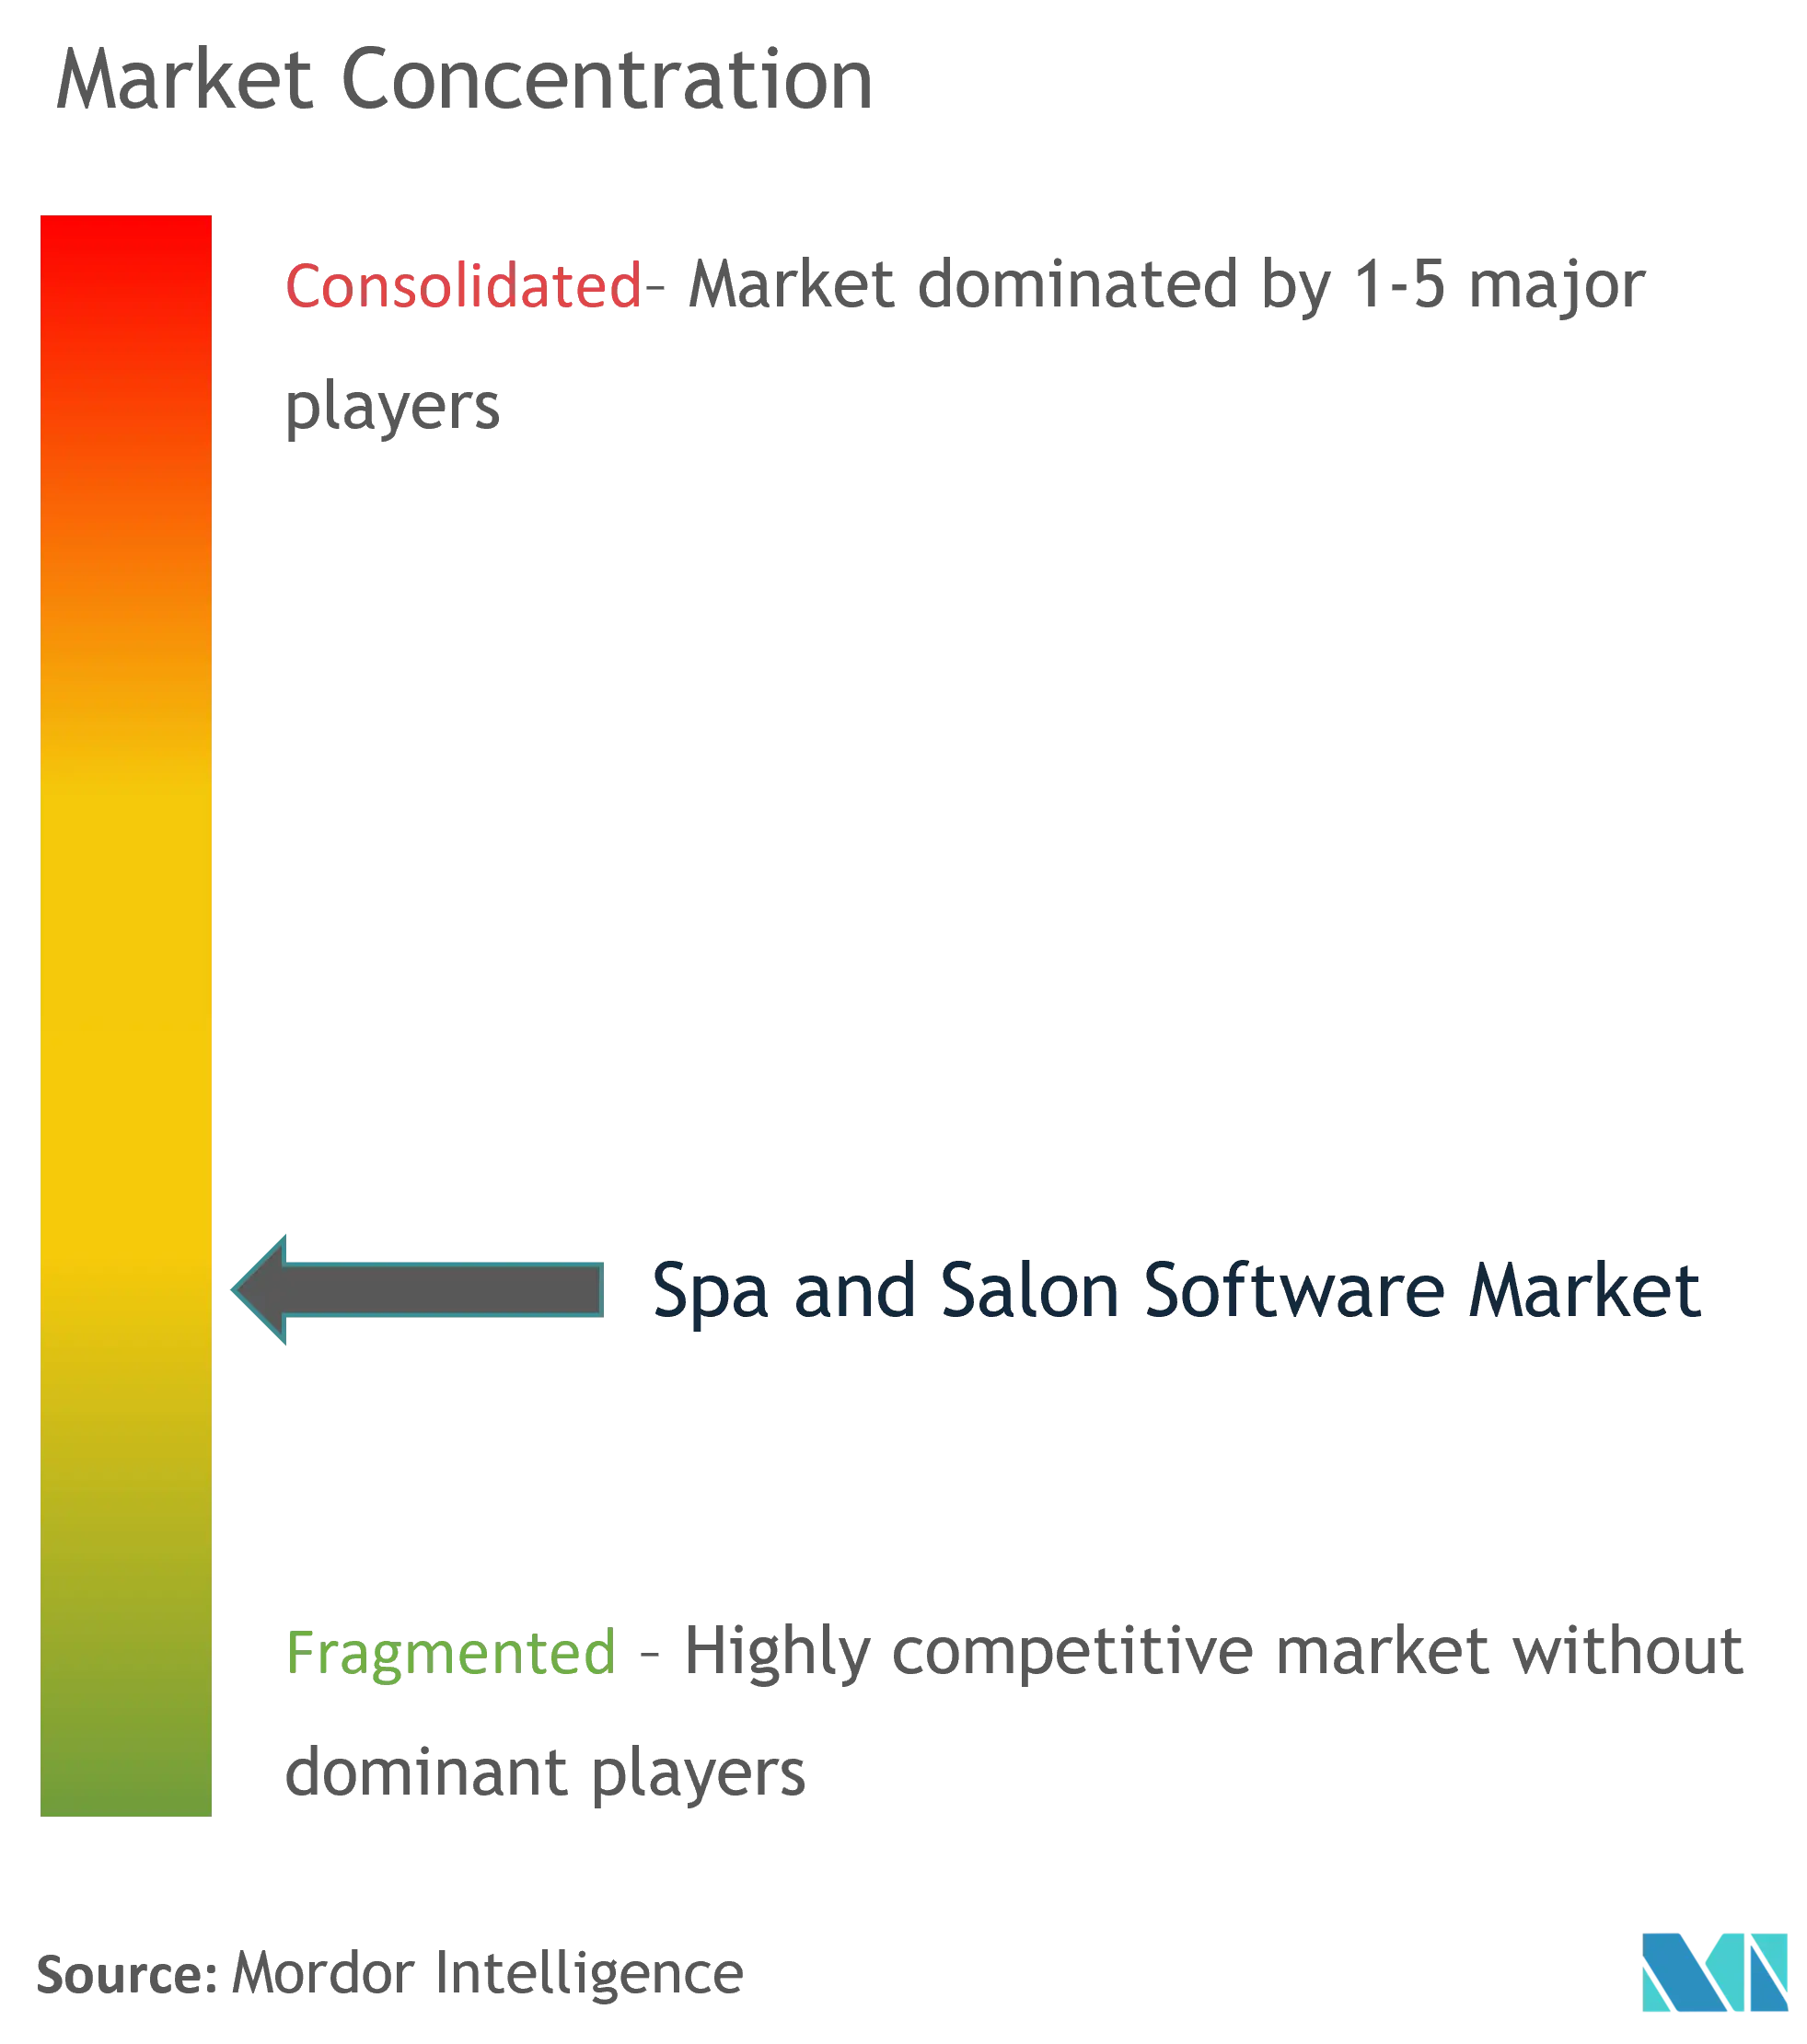 Spa and Salon Software Market  - Market Concentration.png